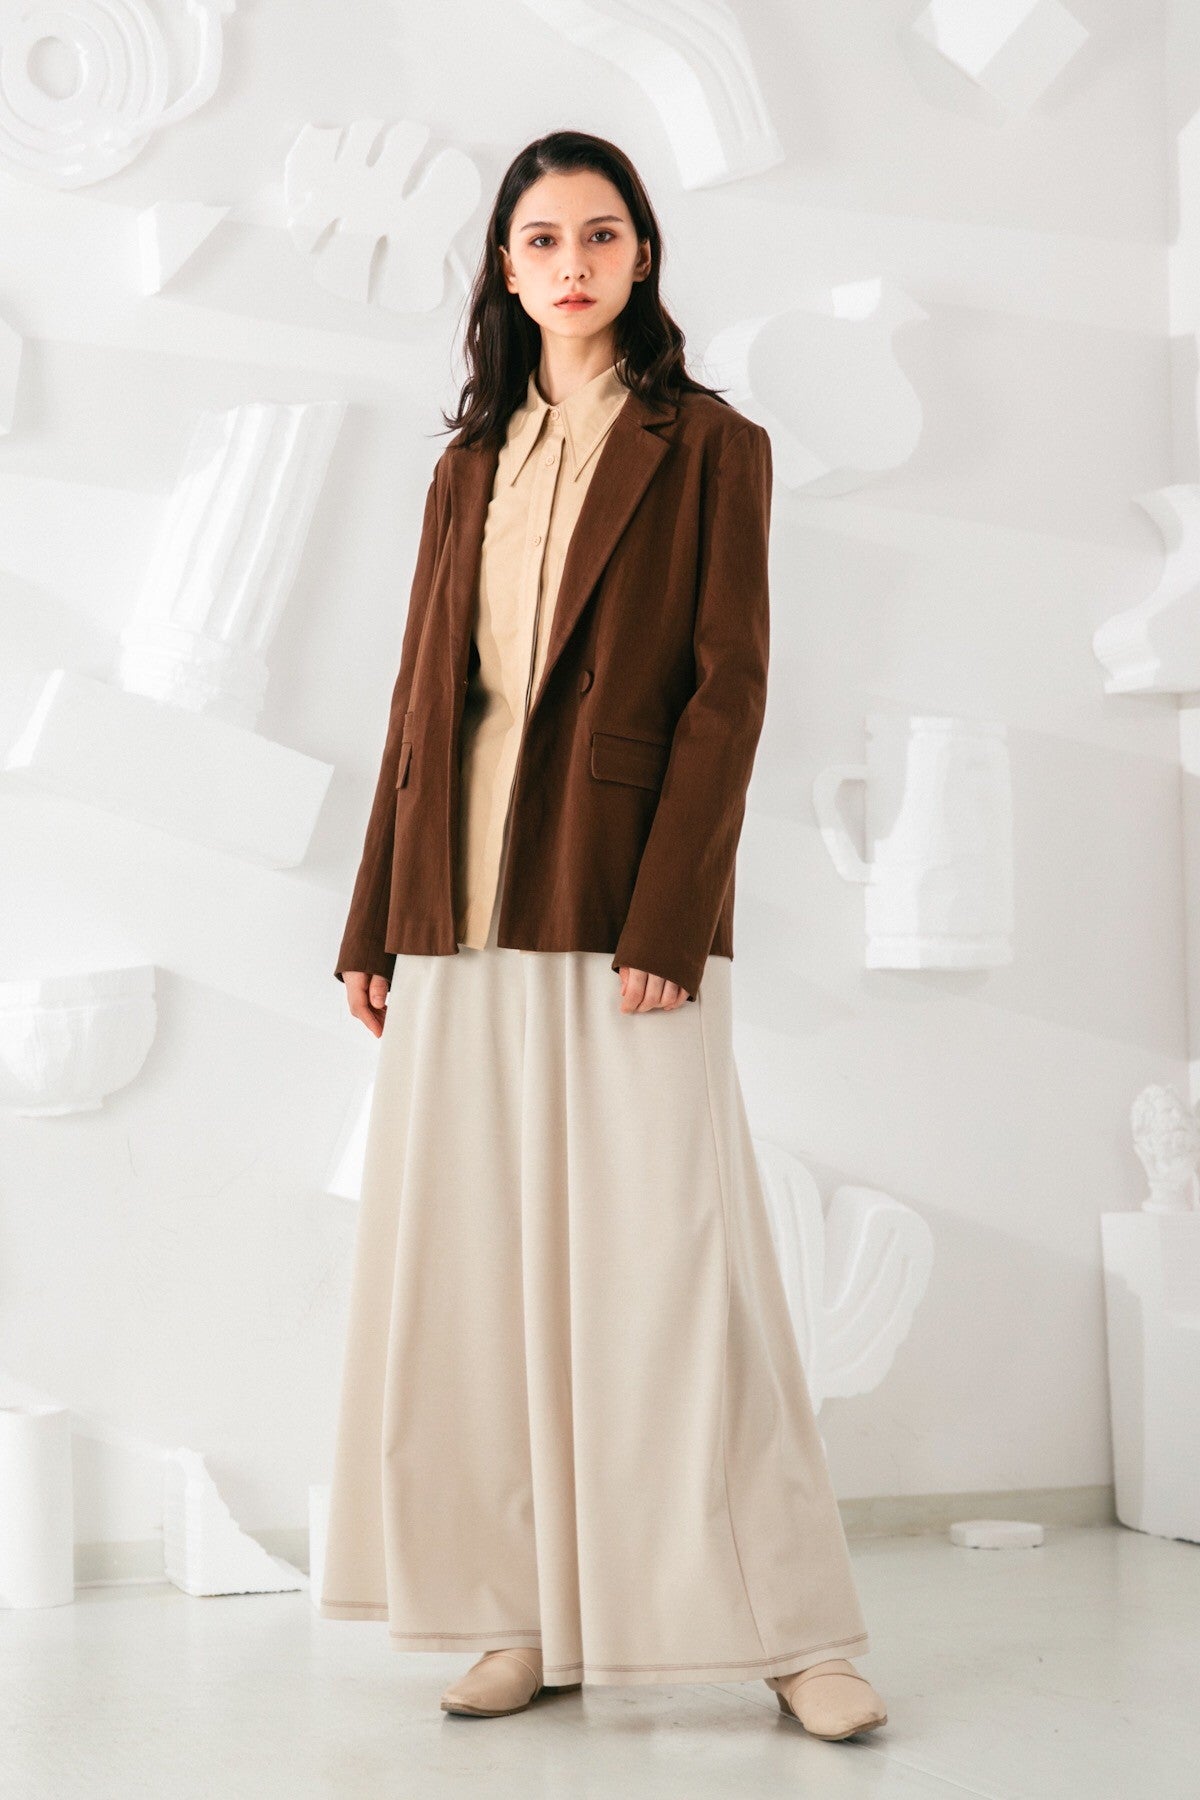 SKYE San Francisco SF shop ethical sustainable modern minimalist quality women clothing fashion Stéphane Pants beige 4